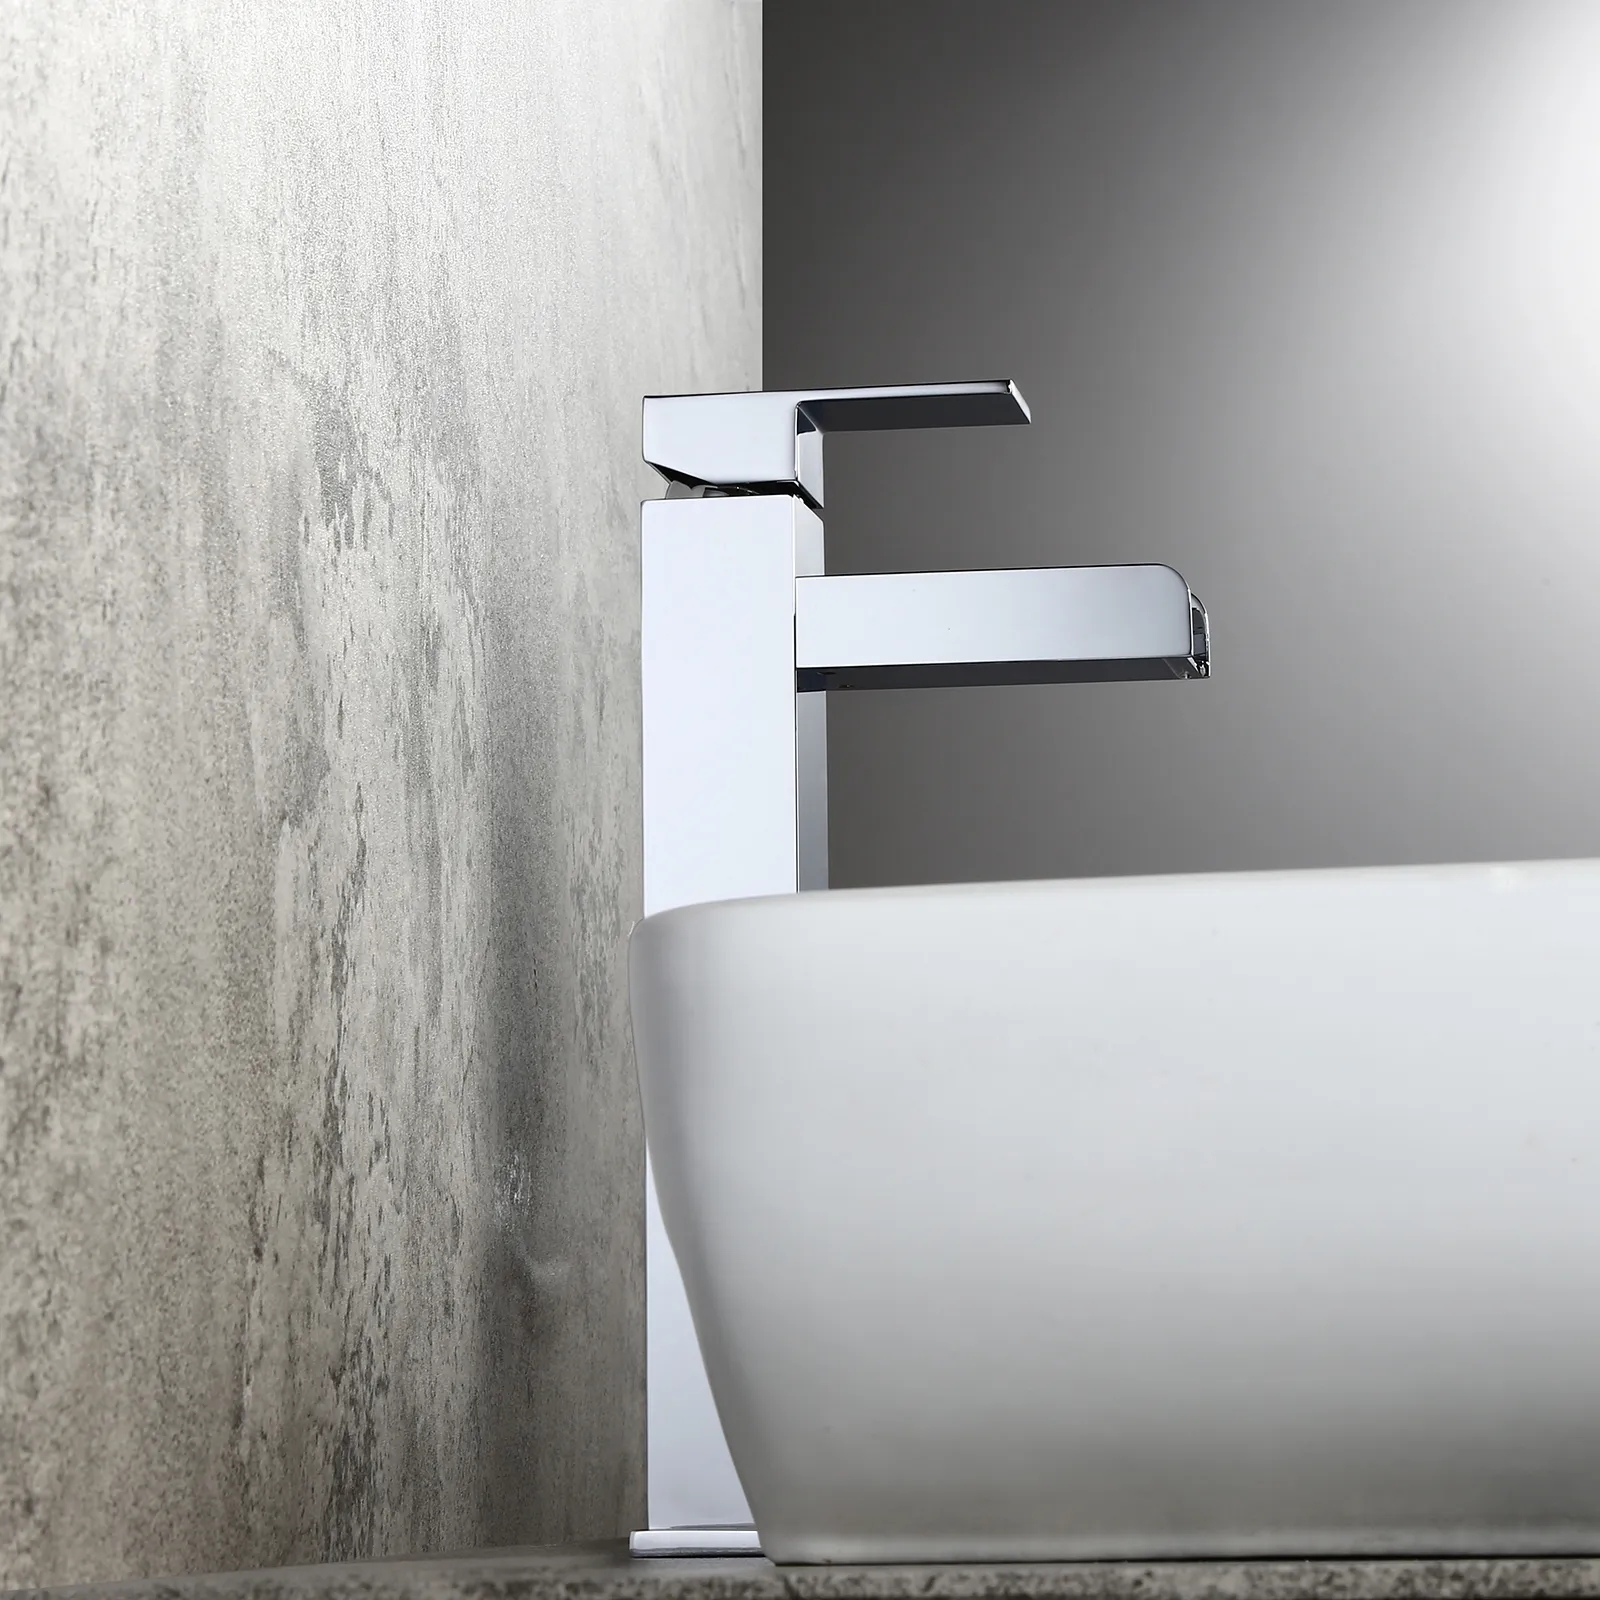 Chrome Single Handle Waterfall Bathroom Vessel Sink Faucet Solid Brass Modern